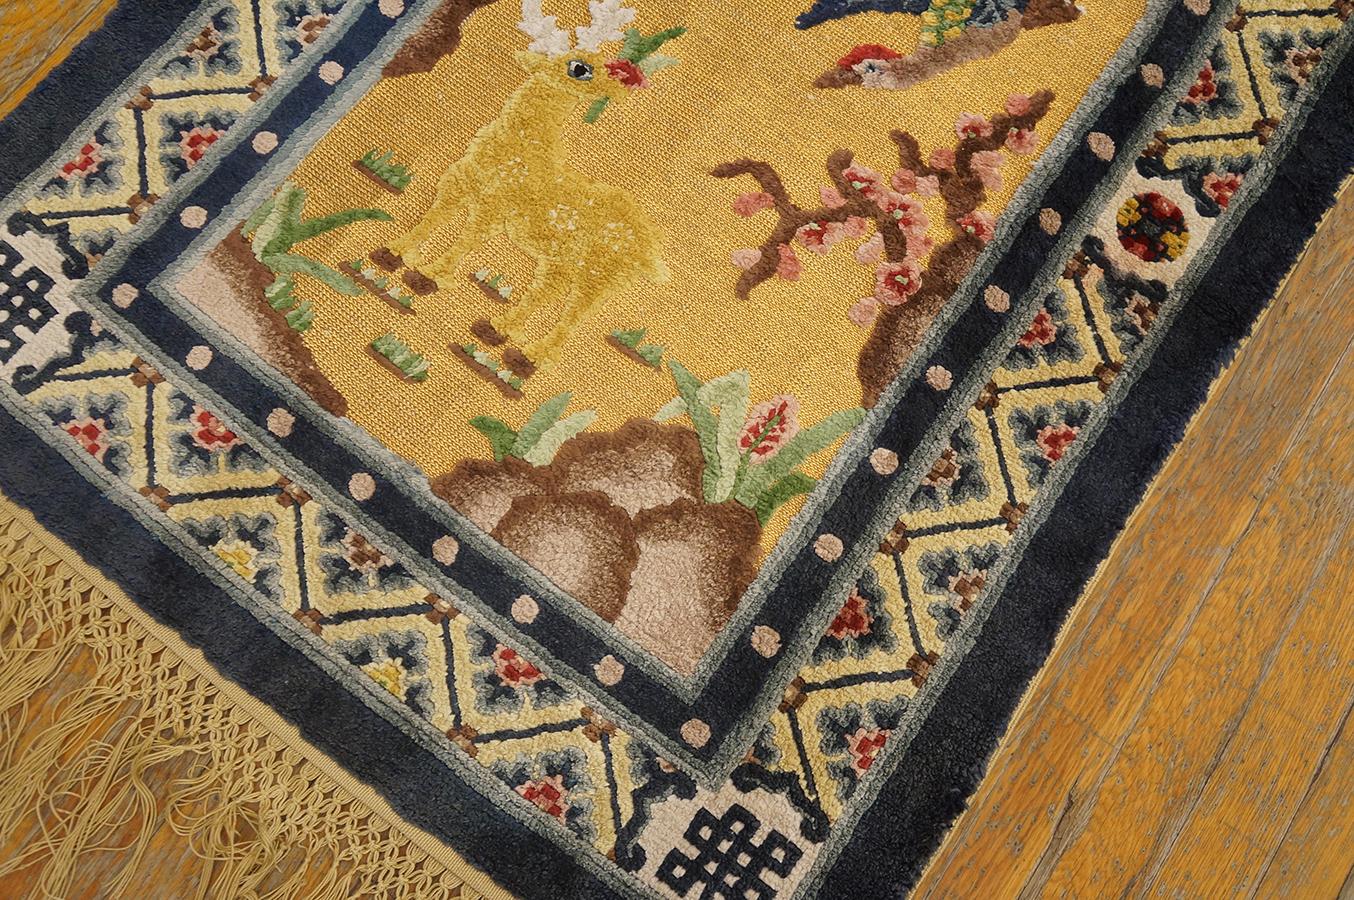 Early 20th Century Chinese Silk & Metallic Thread Carpet ( 2'7